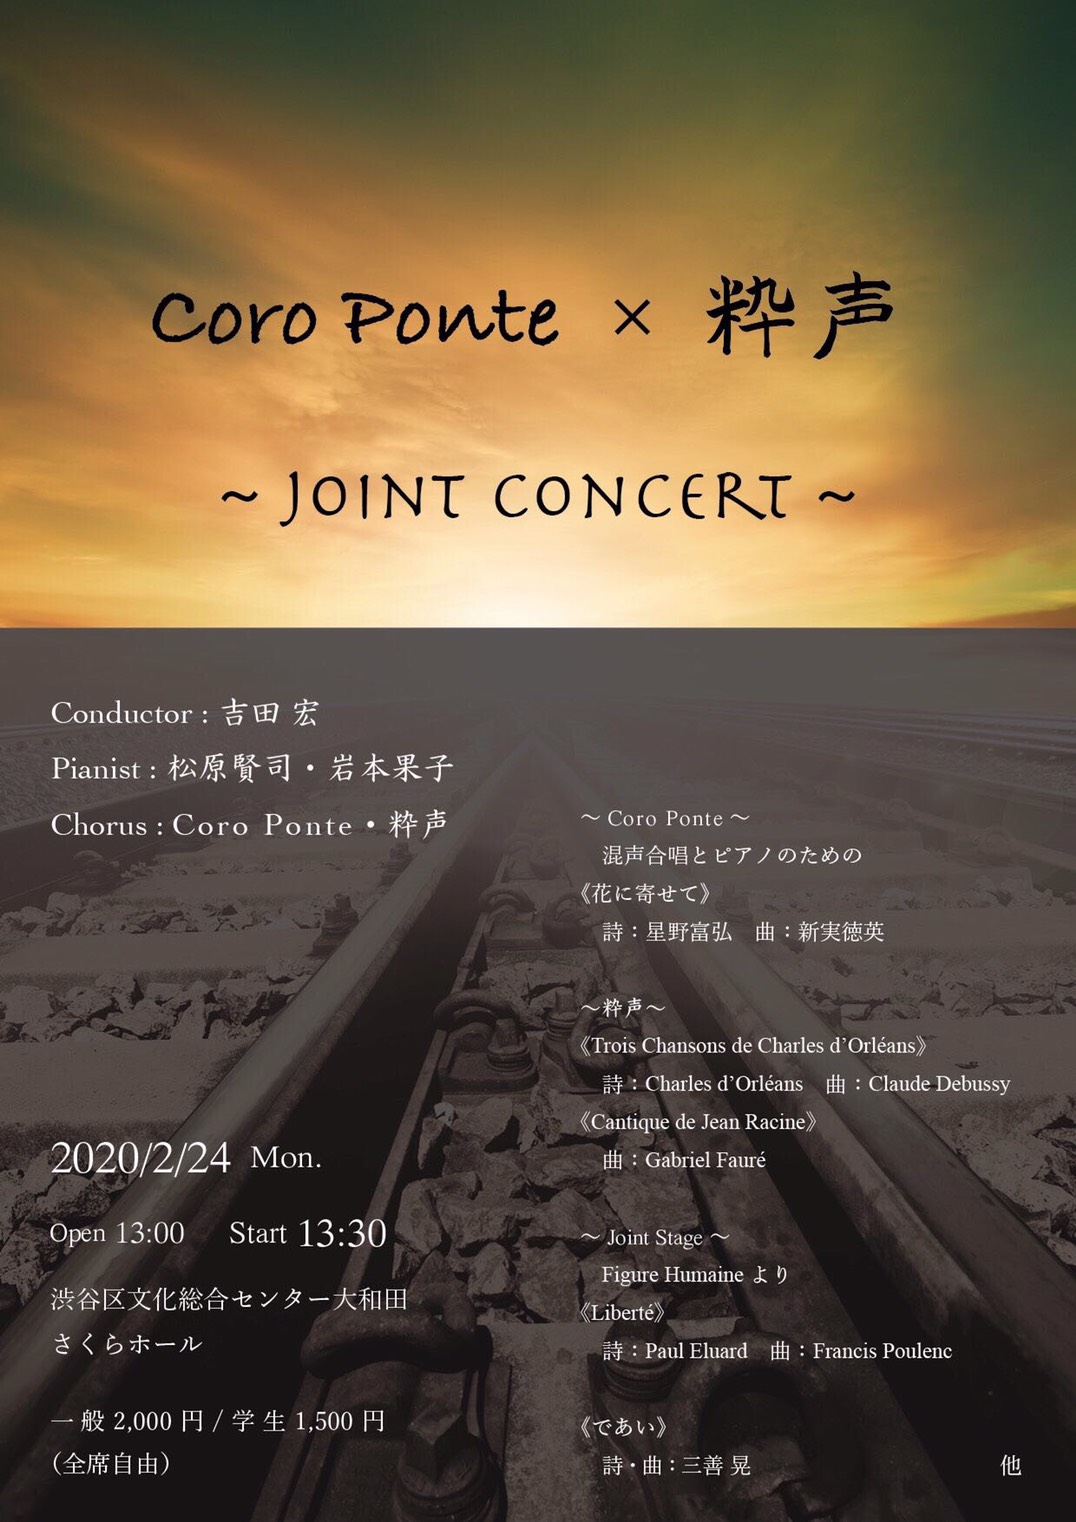 Coro Ponte × 粋声 Joint Concert